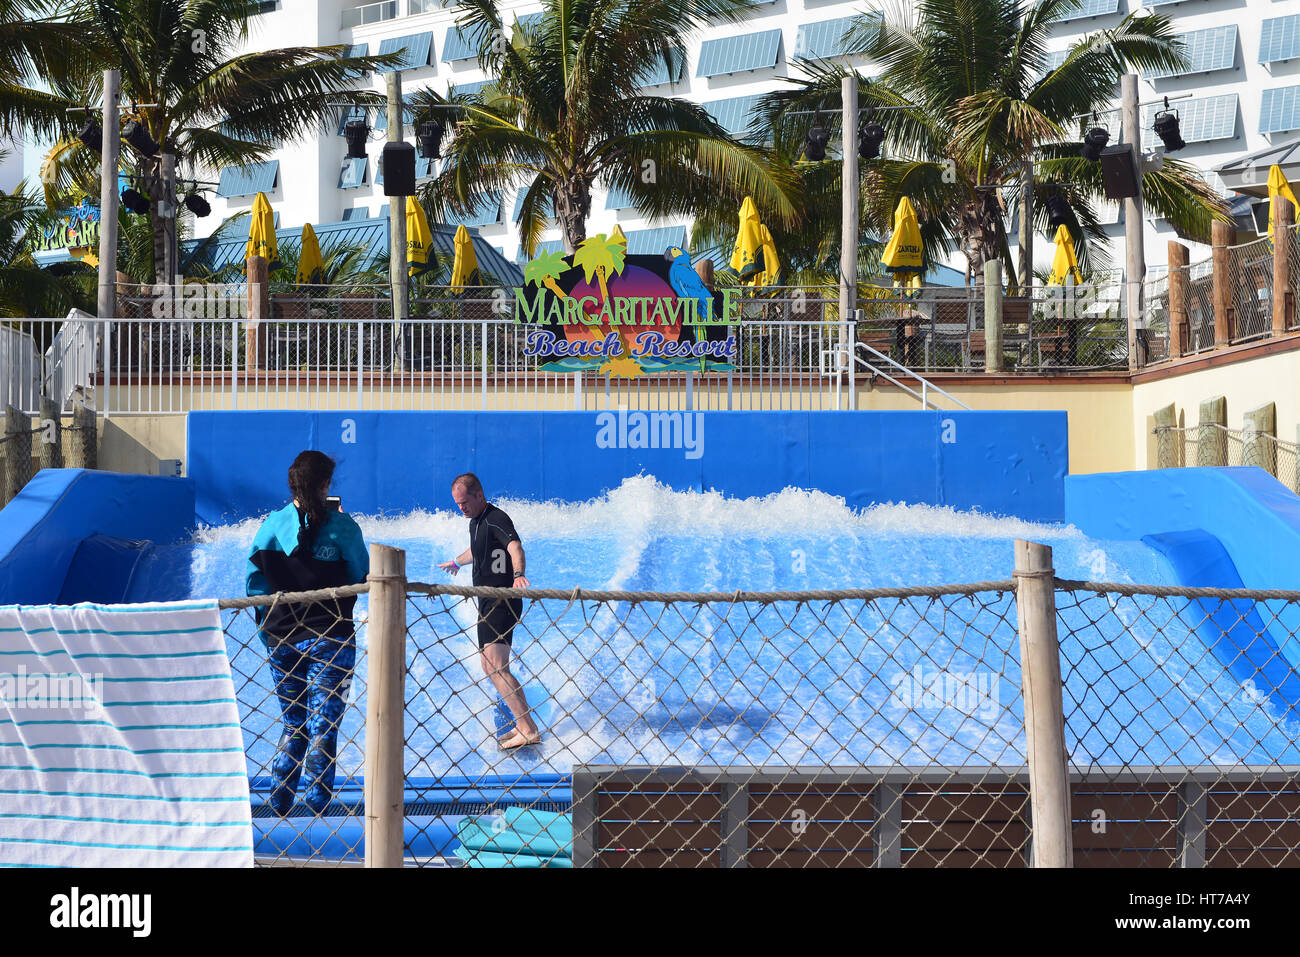 Hollywood Beach, FL, USA - March 5, 2017: People enjoy the FlowRider surf simulator the Margaritaville Beach Resort.  Margaritaville is a popular chai Stock Photo